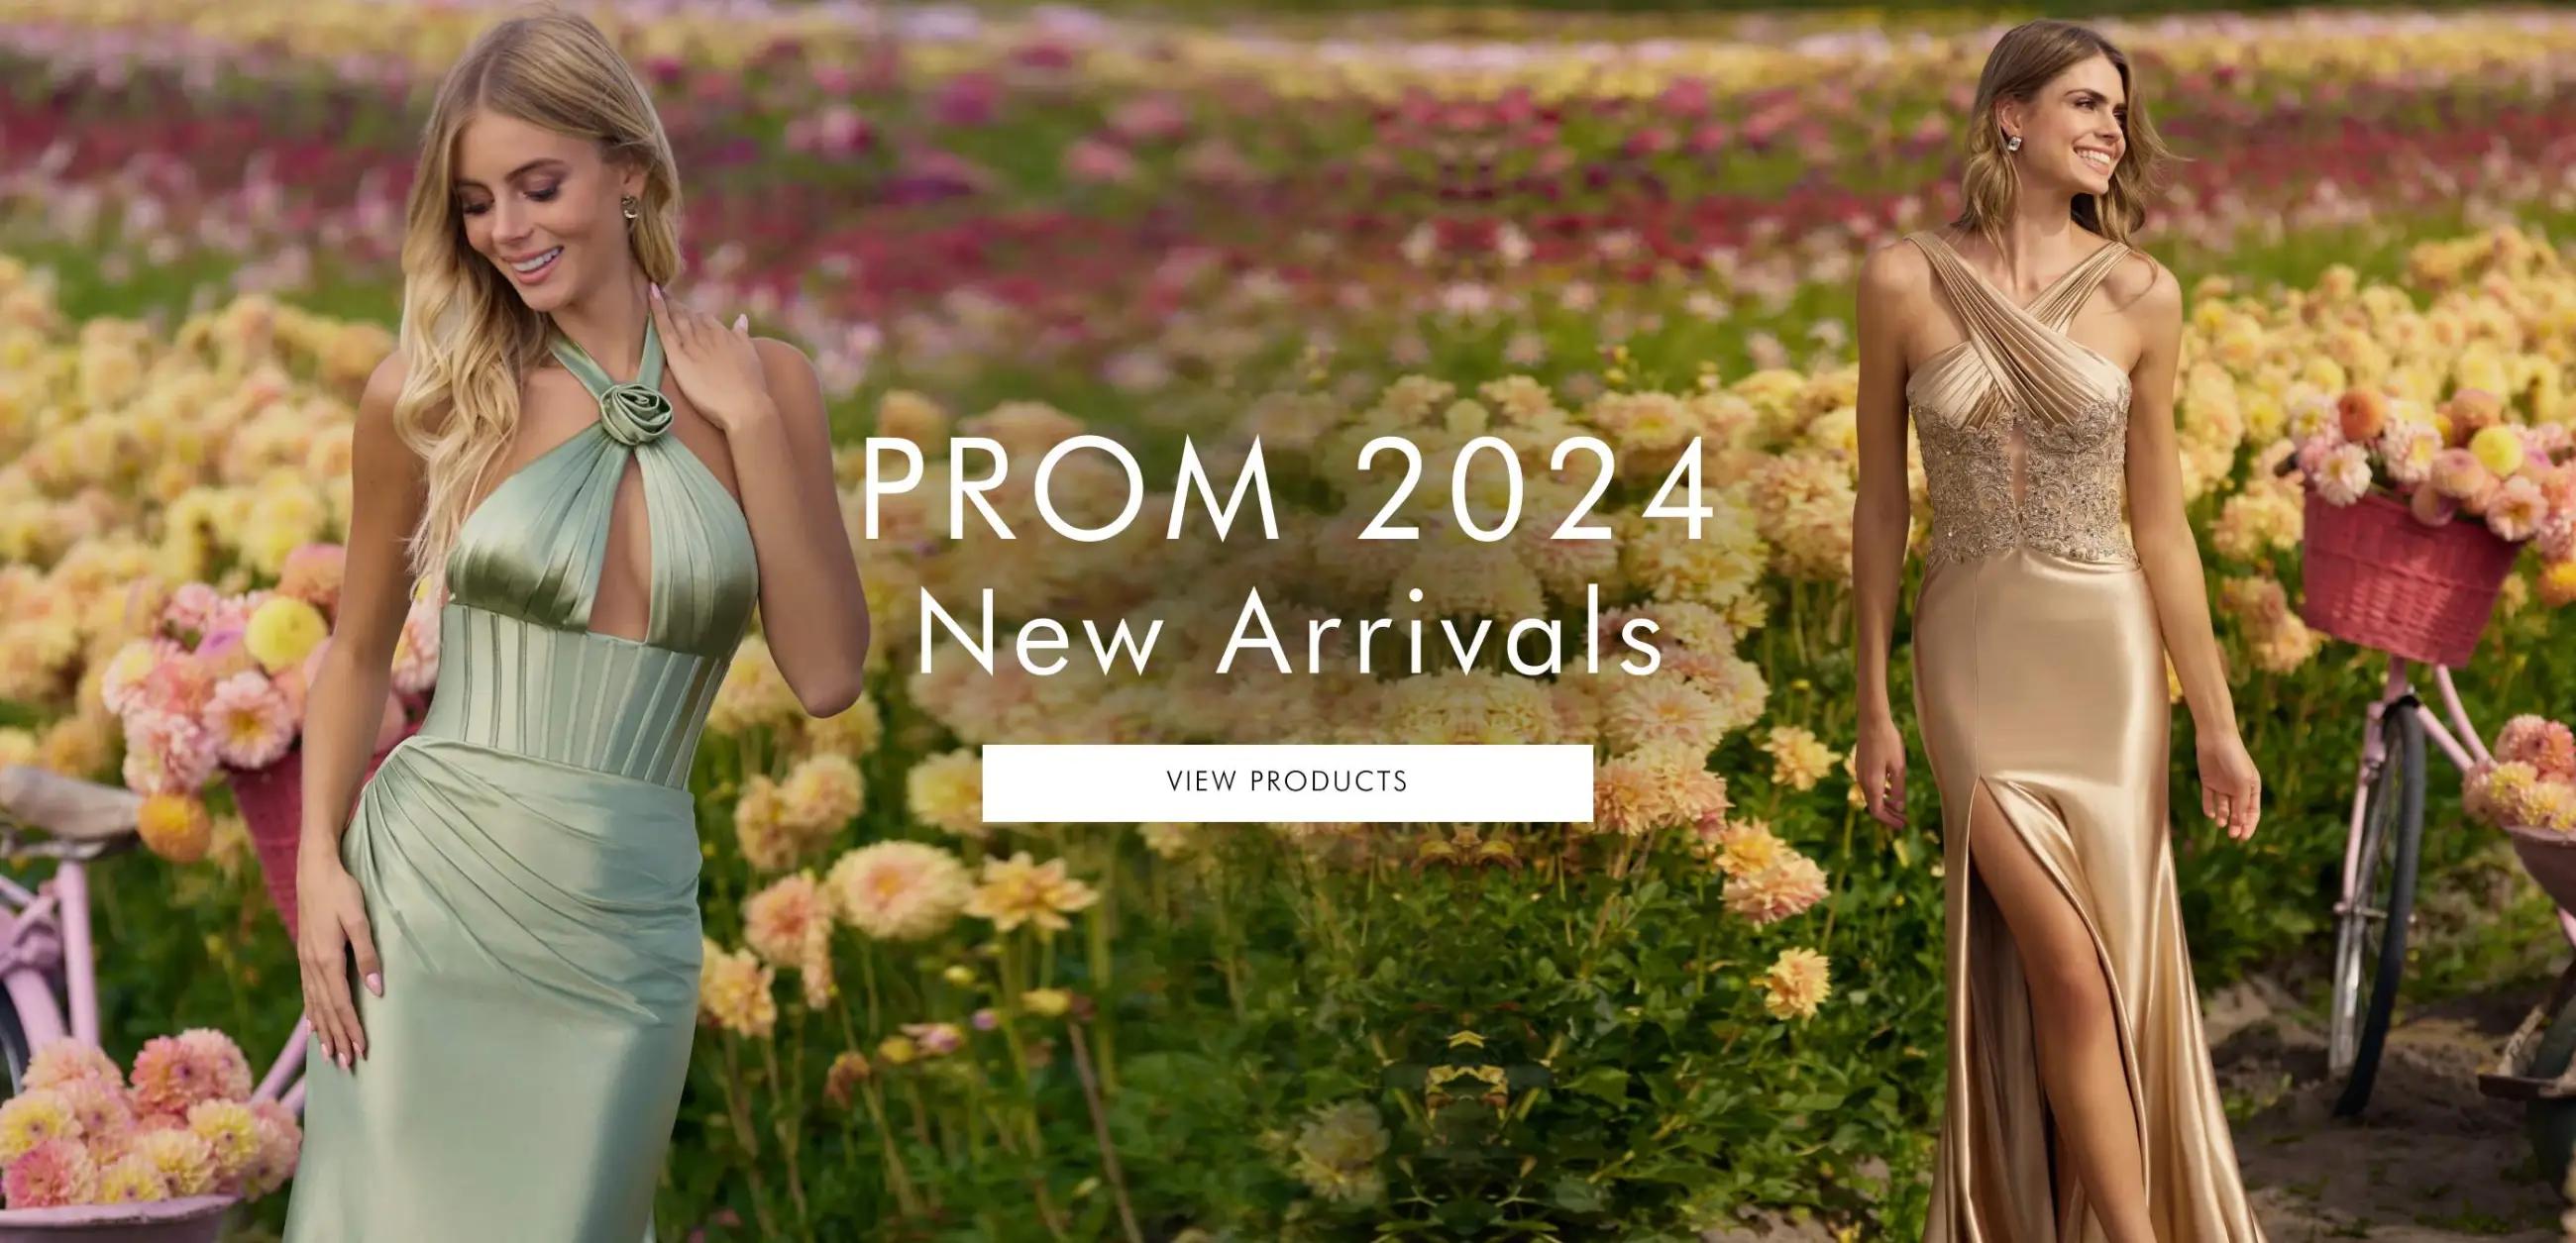 Prom 2024 banner desktop